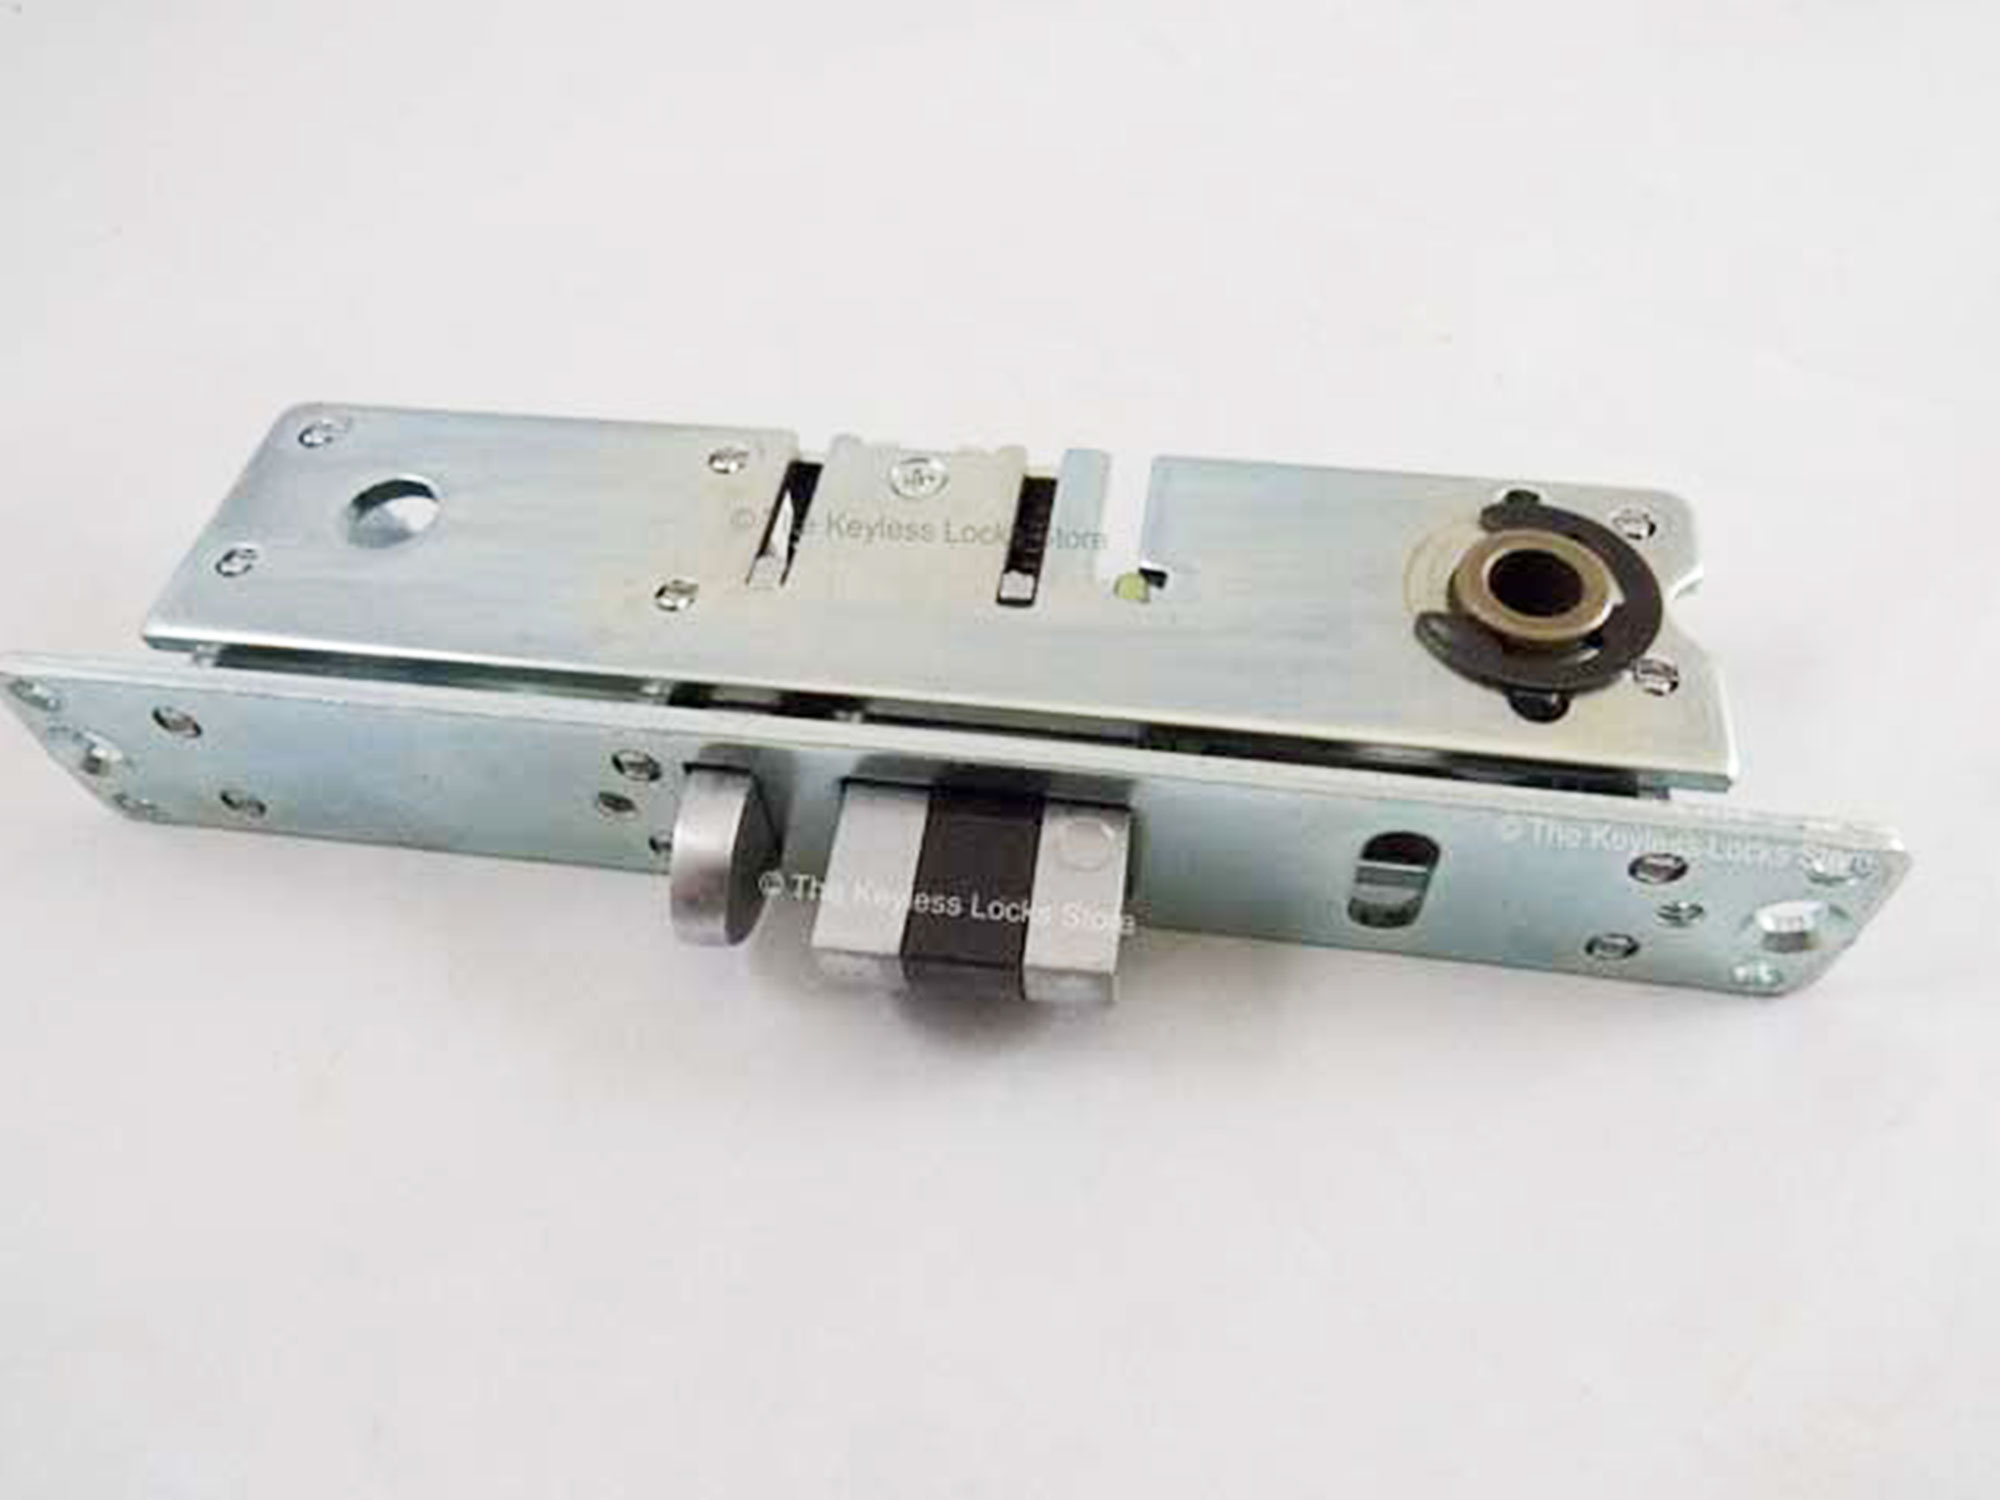 Lockey 2930 Narrow-Stile Passage Latchbolt Knob-Handle Keypad Lock - Click Image to Close